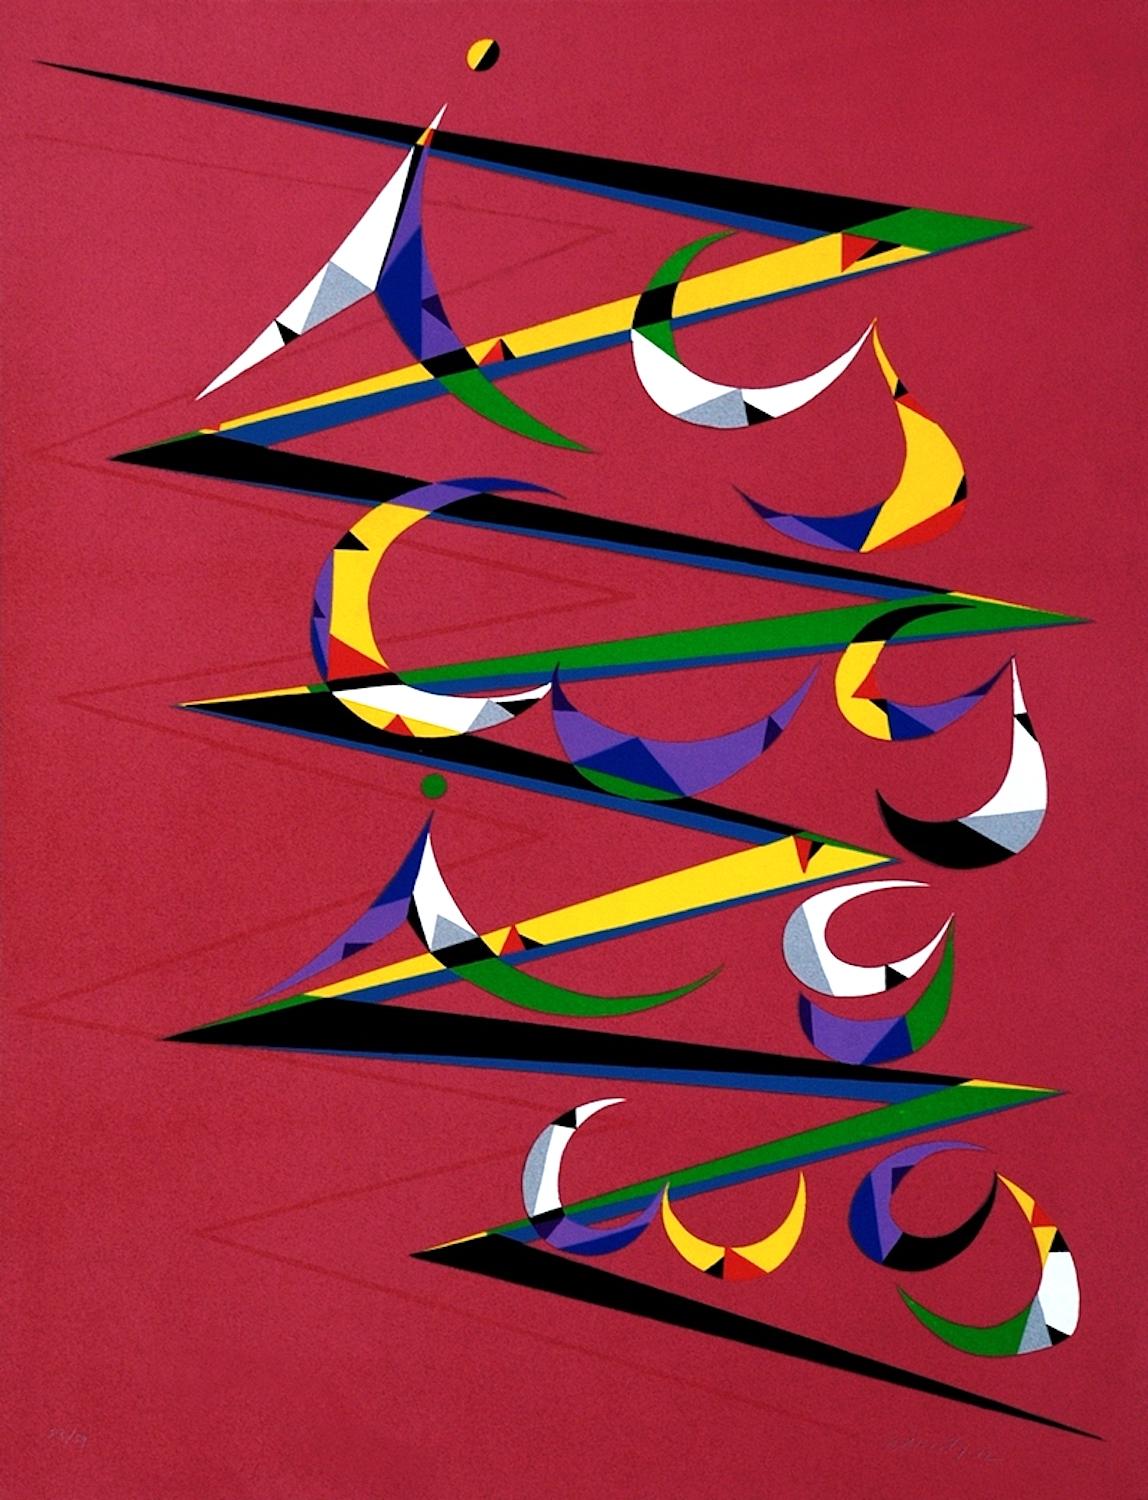 Letter Z - Original Lithograph by Raphael Alberti - 1972